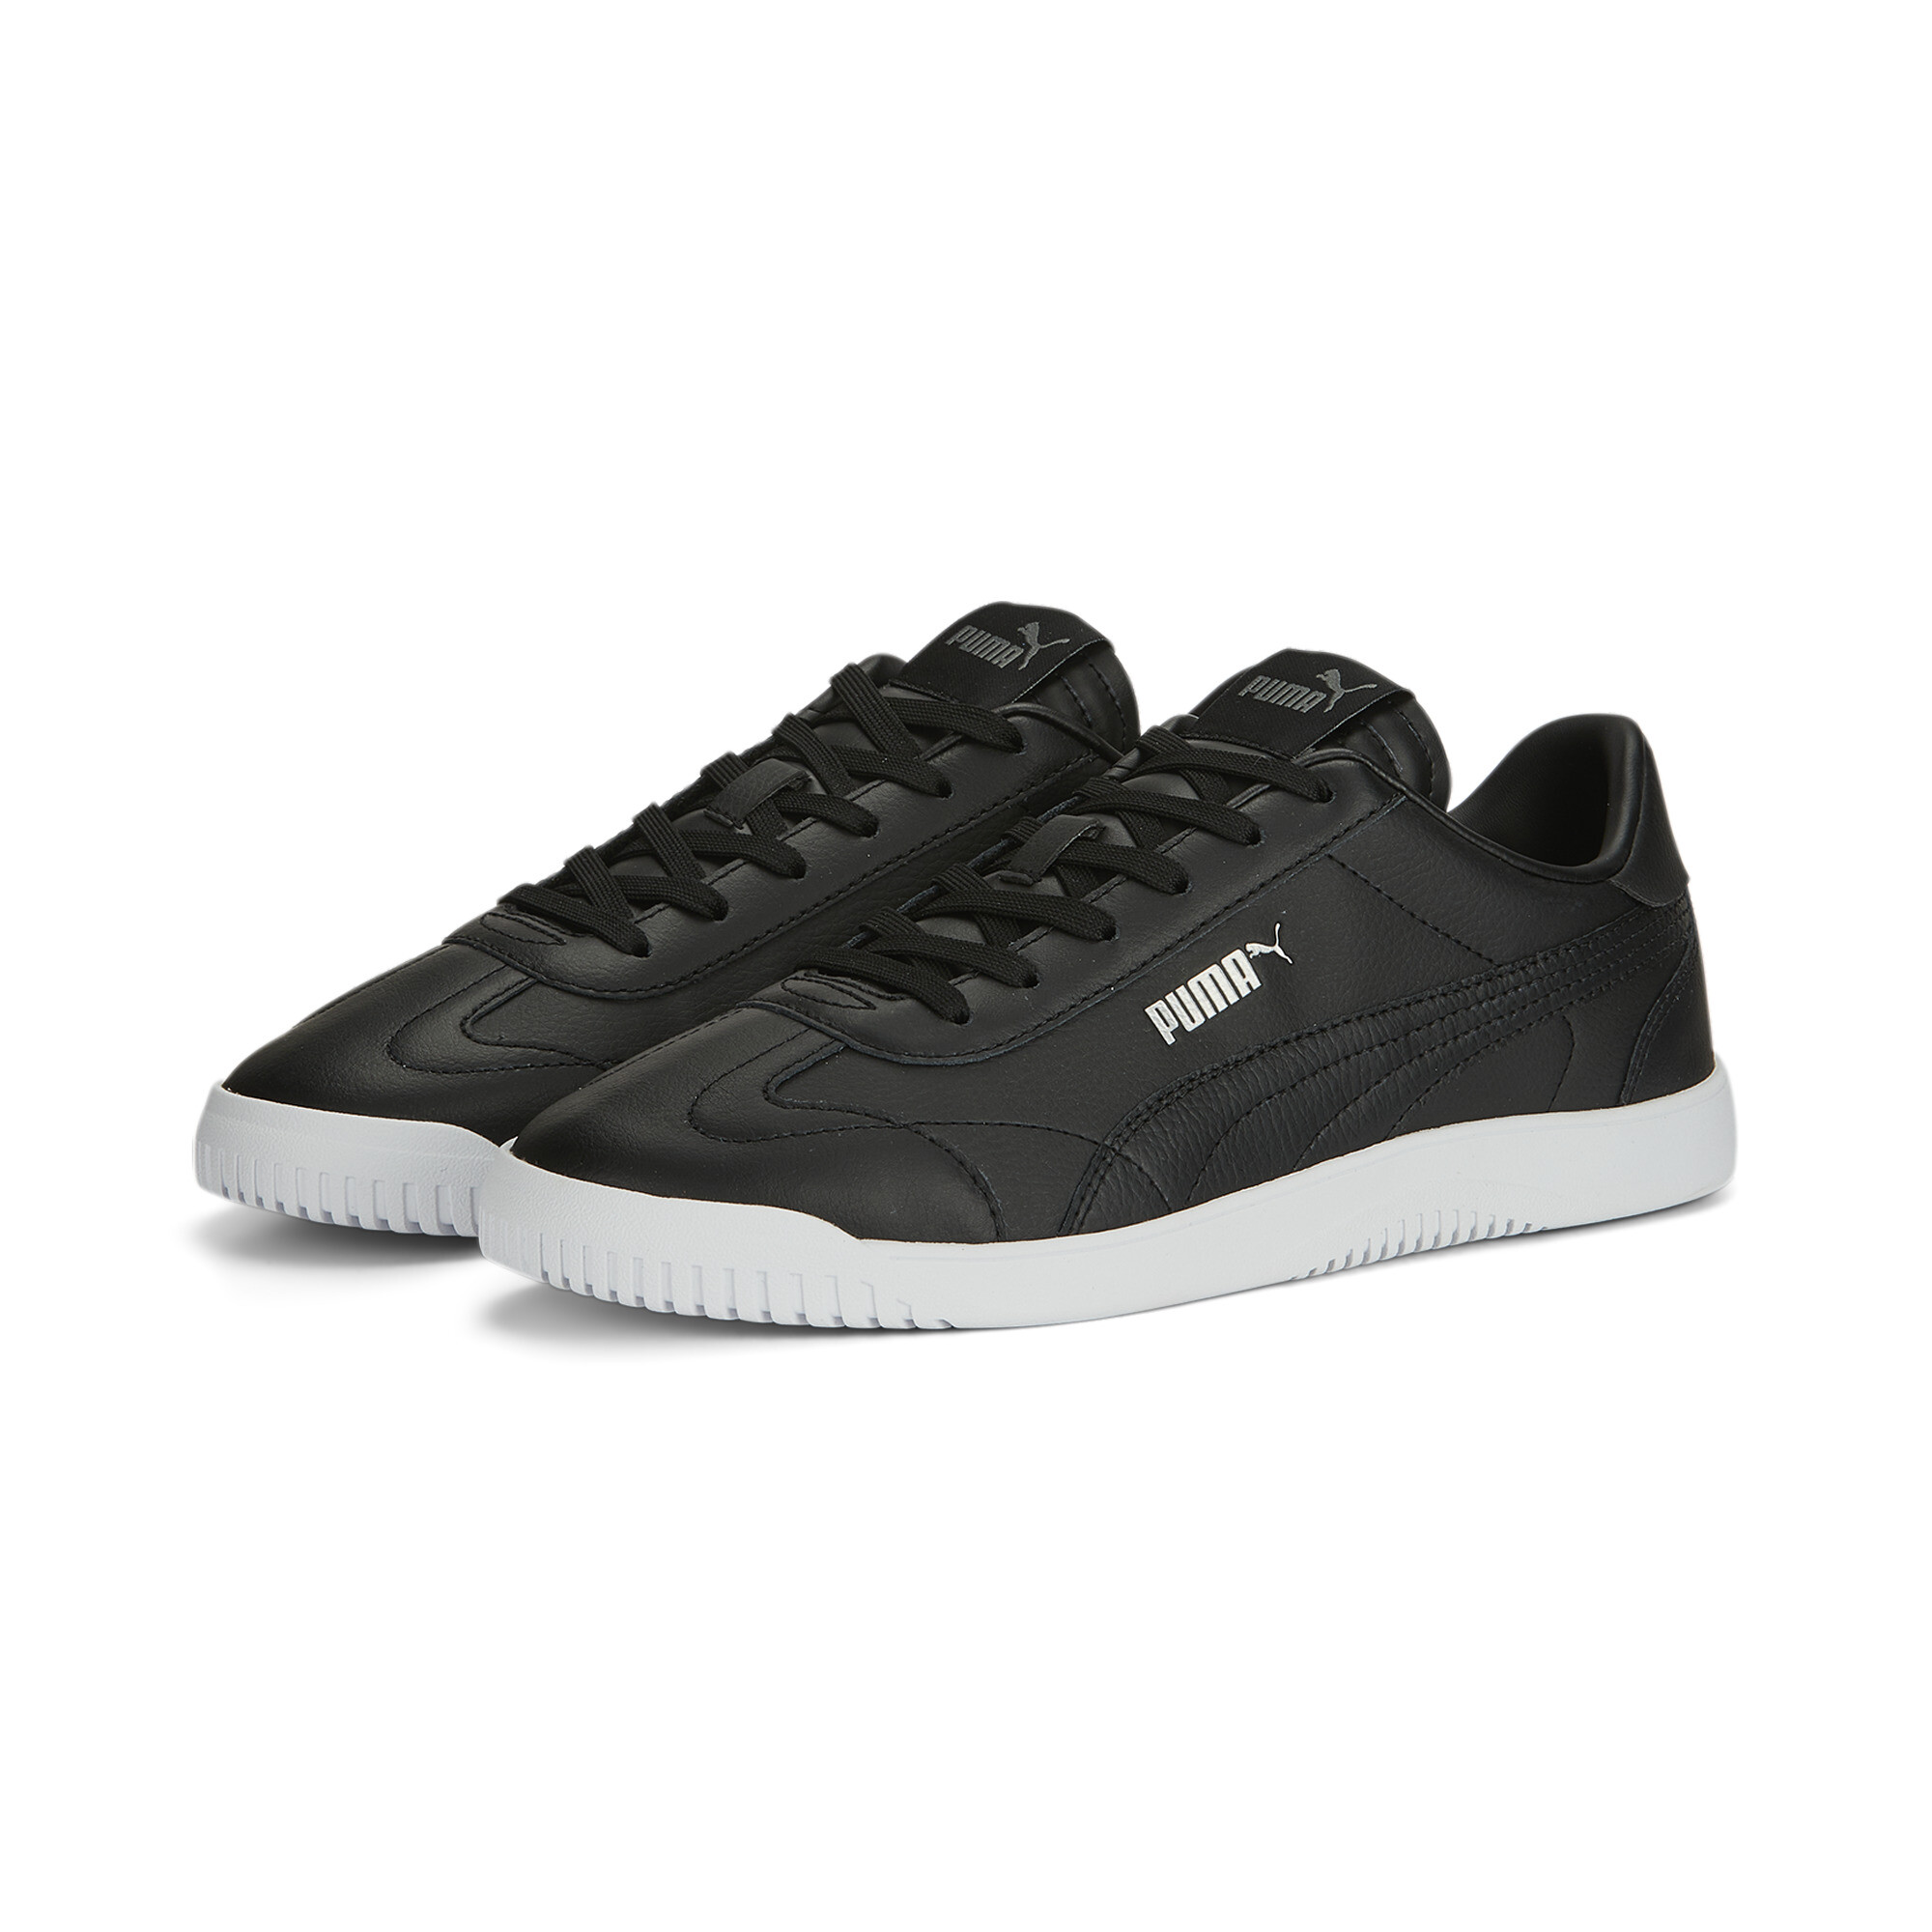 Puma Club 5v5 Sneakers, Black, Size 44, Shoes